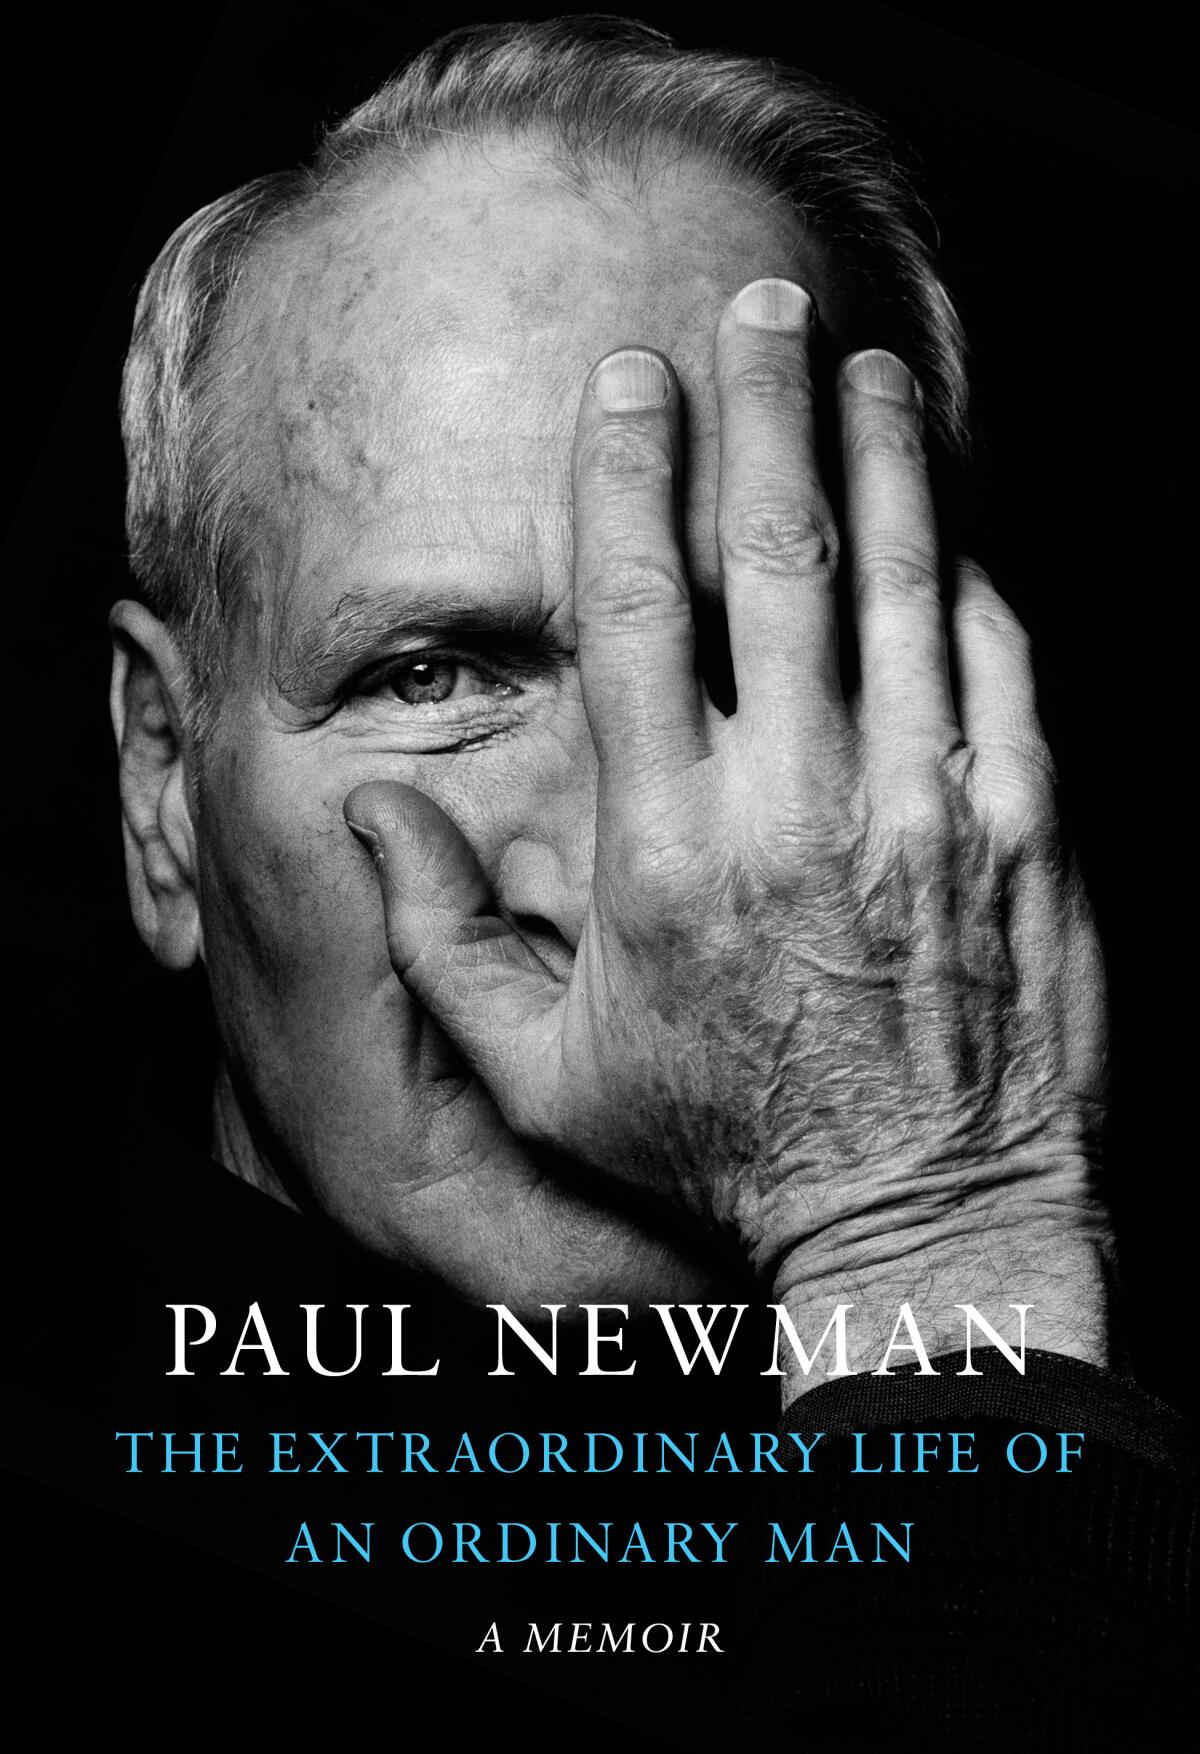 "The Extraordinary Life of an Ordinary Man," by Paul Newman, ed. David Rosenthal